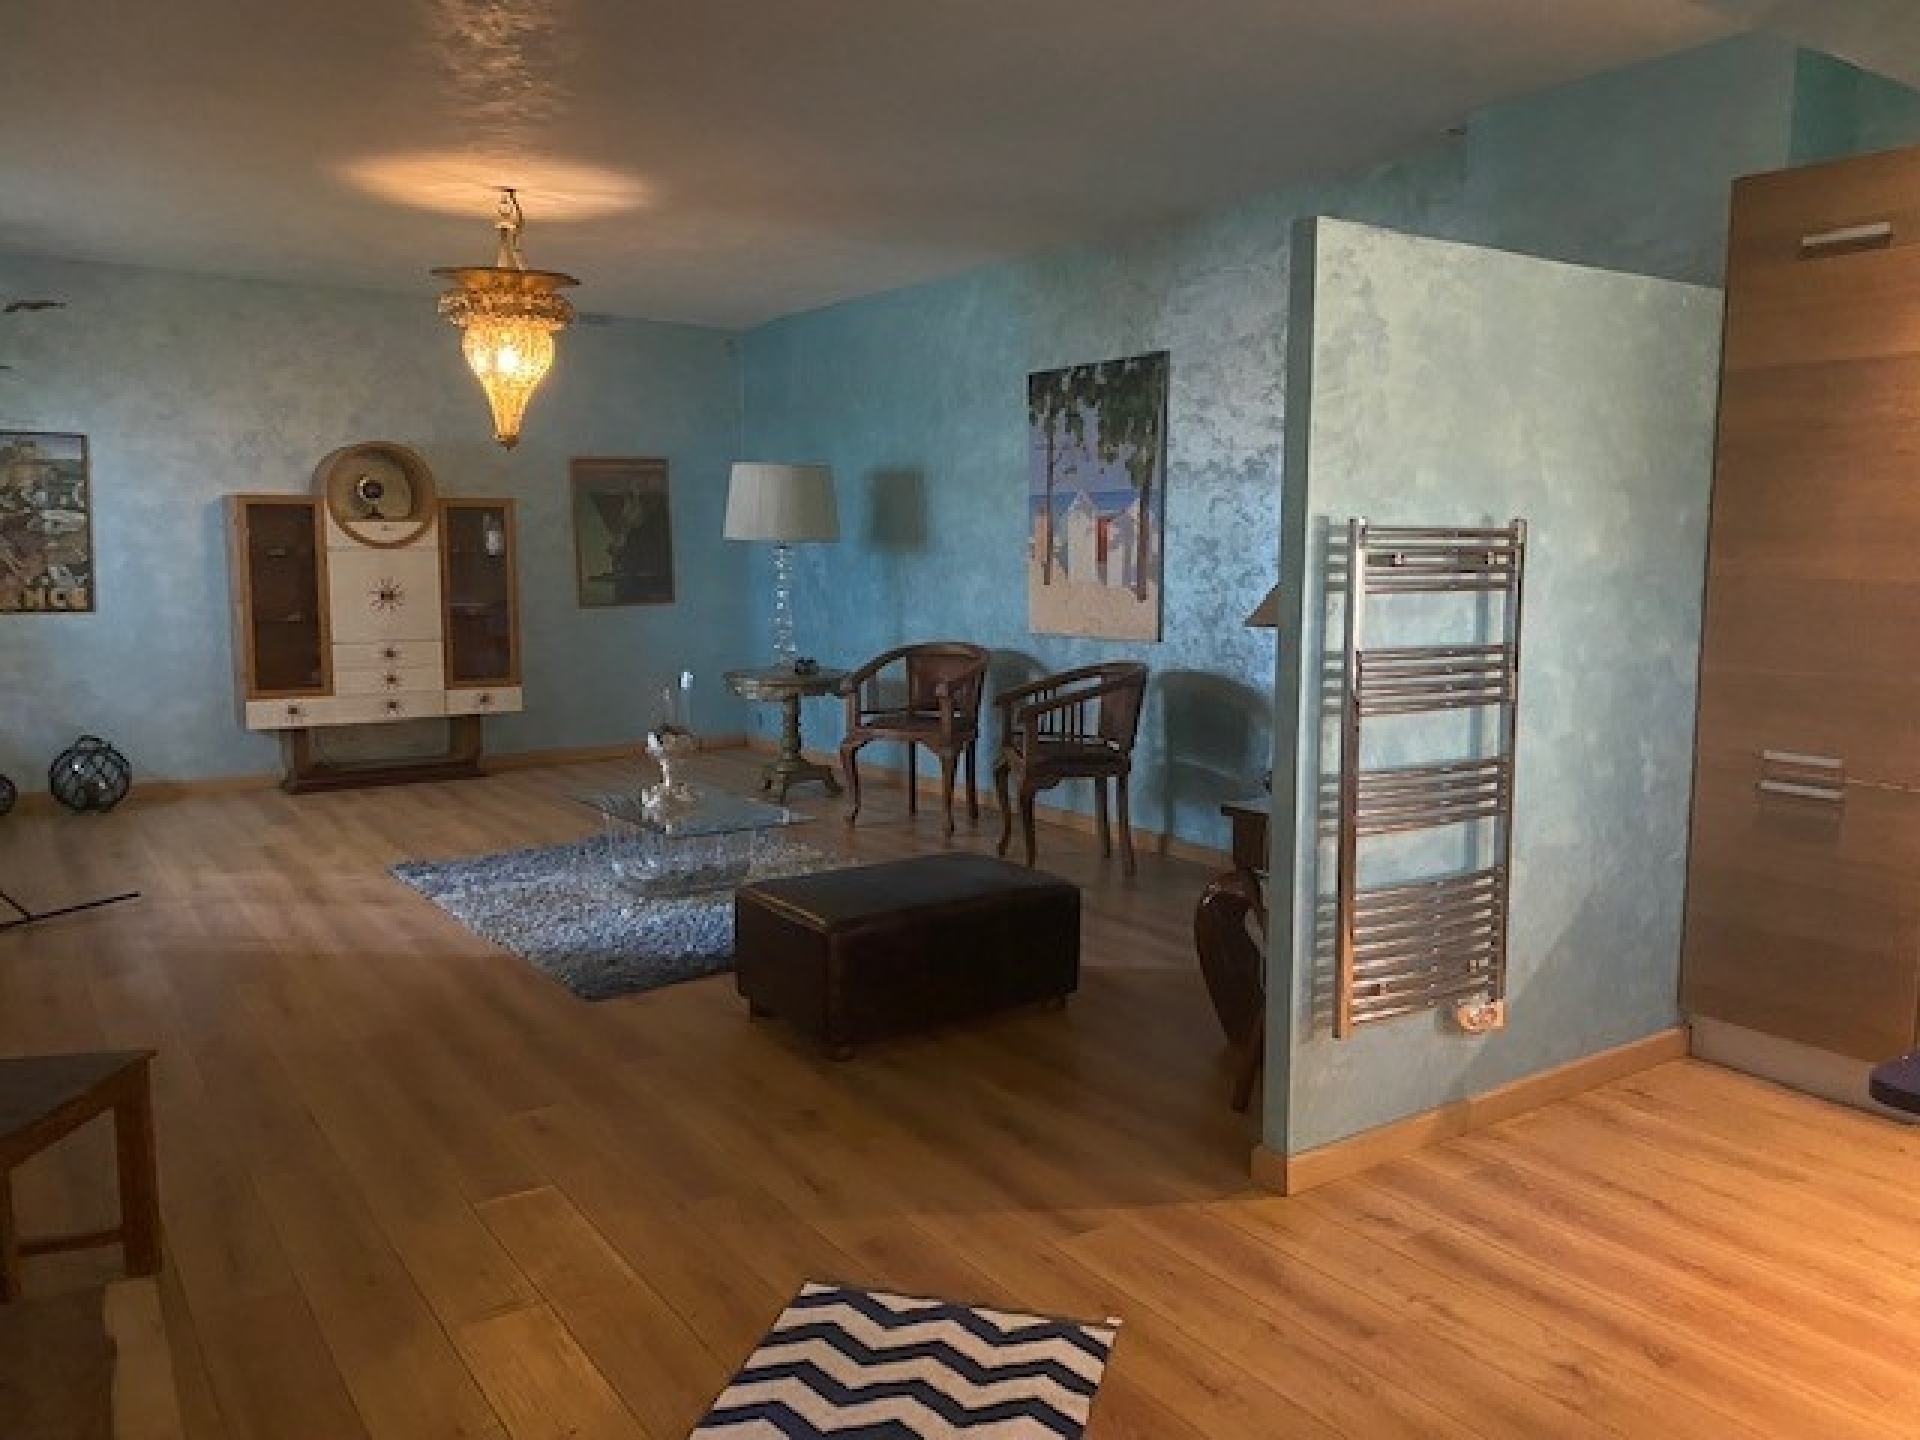 Dotta Appartement de 6+ pieces a vendre - VILLA ALBAYA - Saint-Roman - Monaco - img21